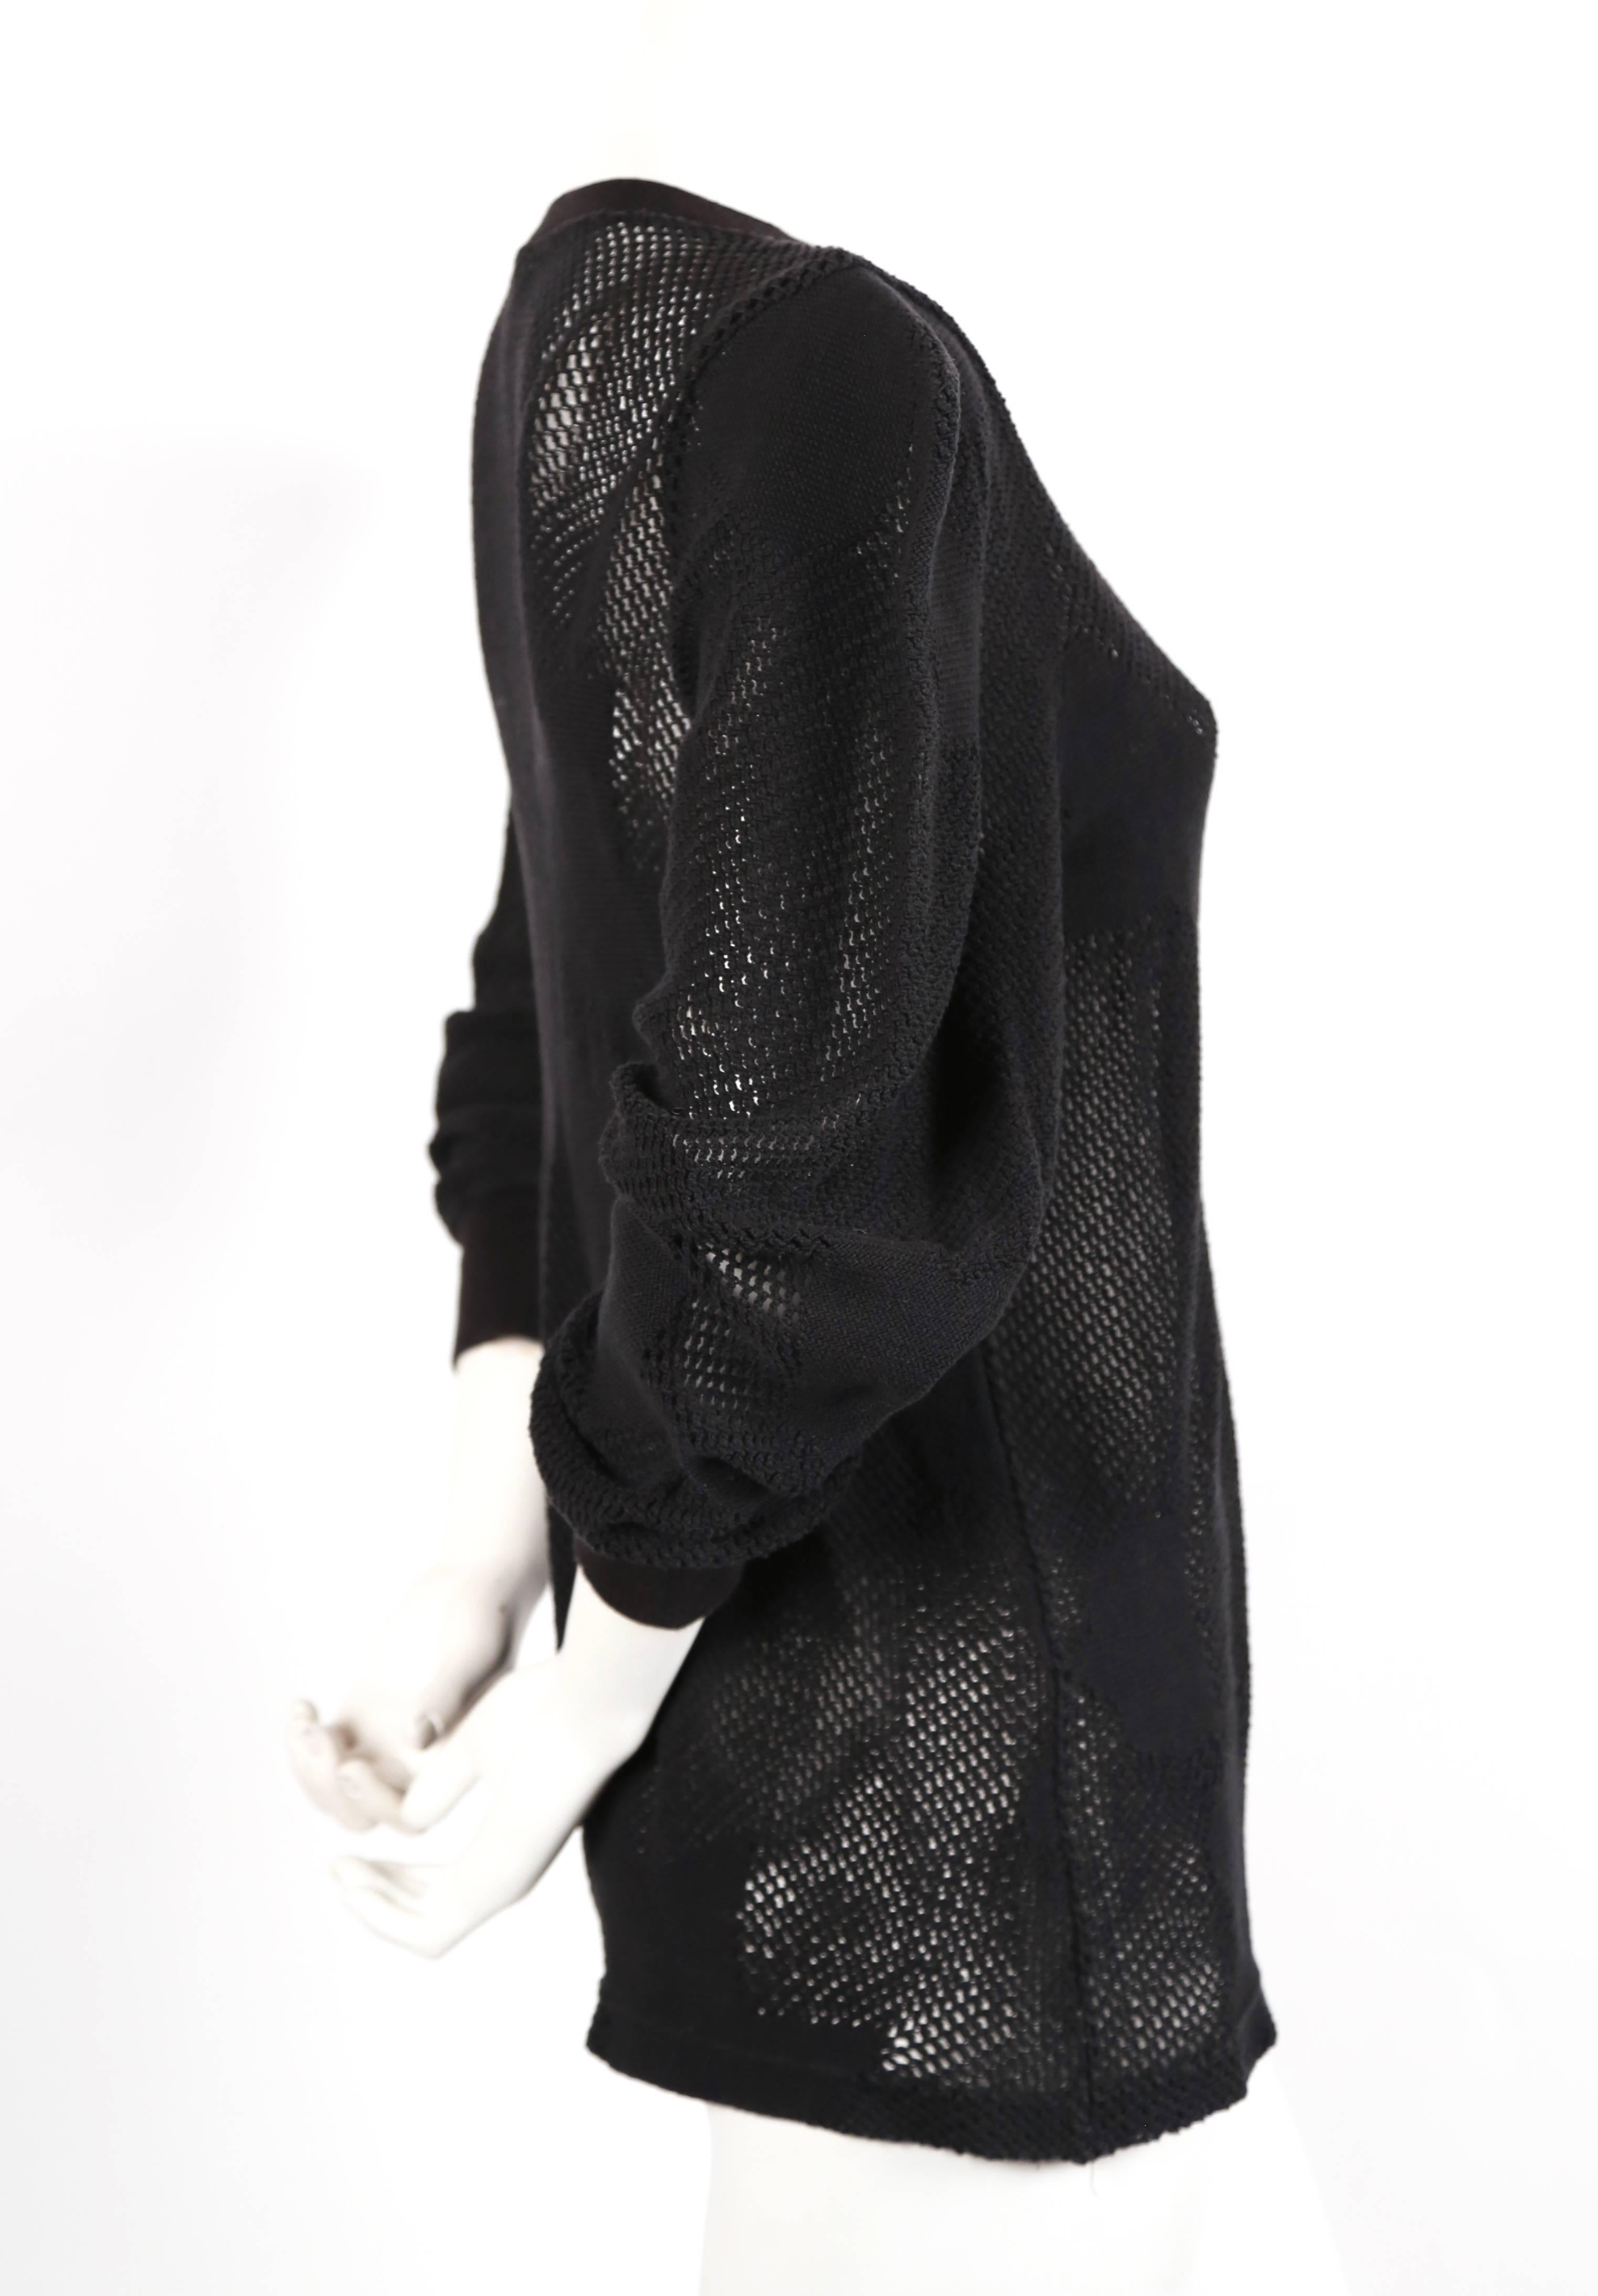 Black 1980's COMME DES GARCONS black knit top with peaked shoulders